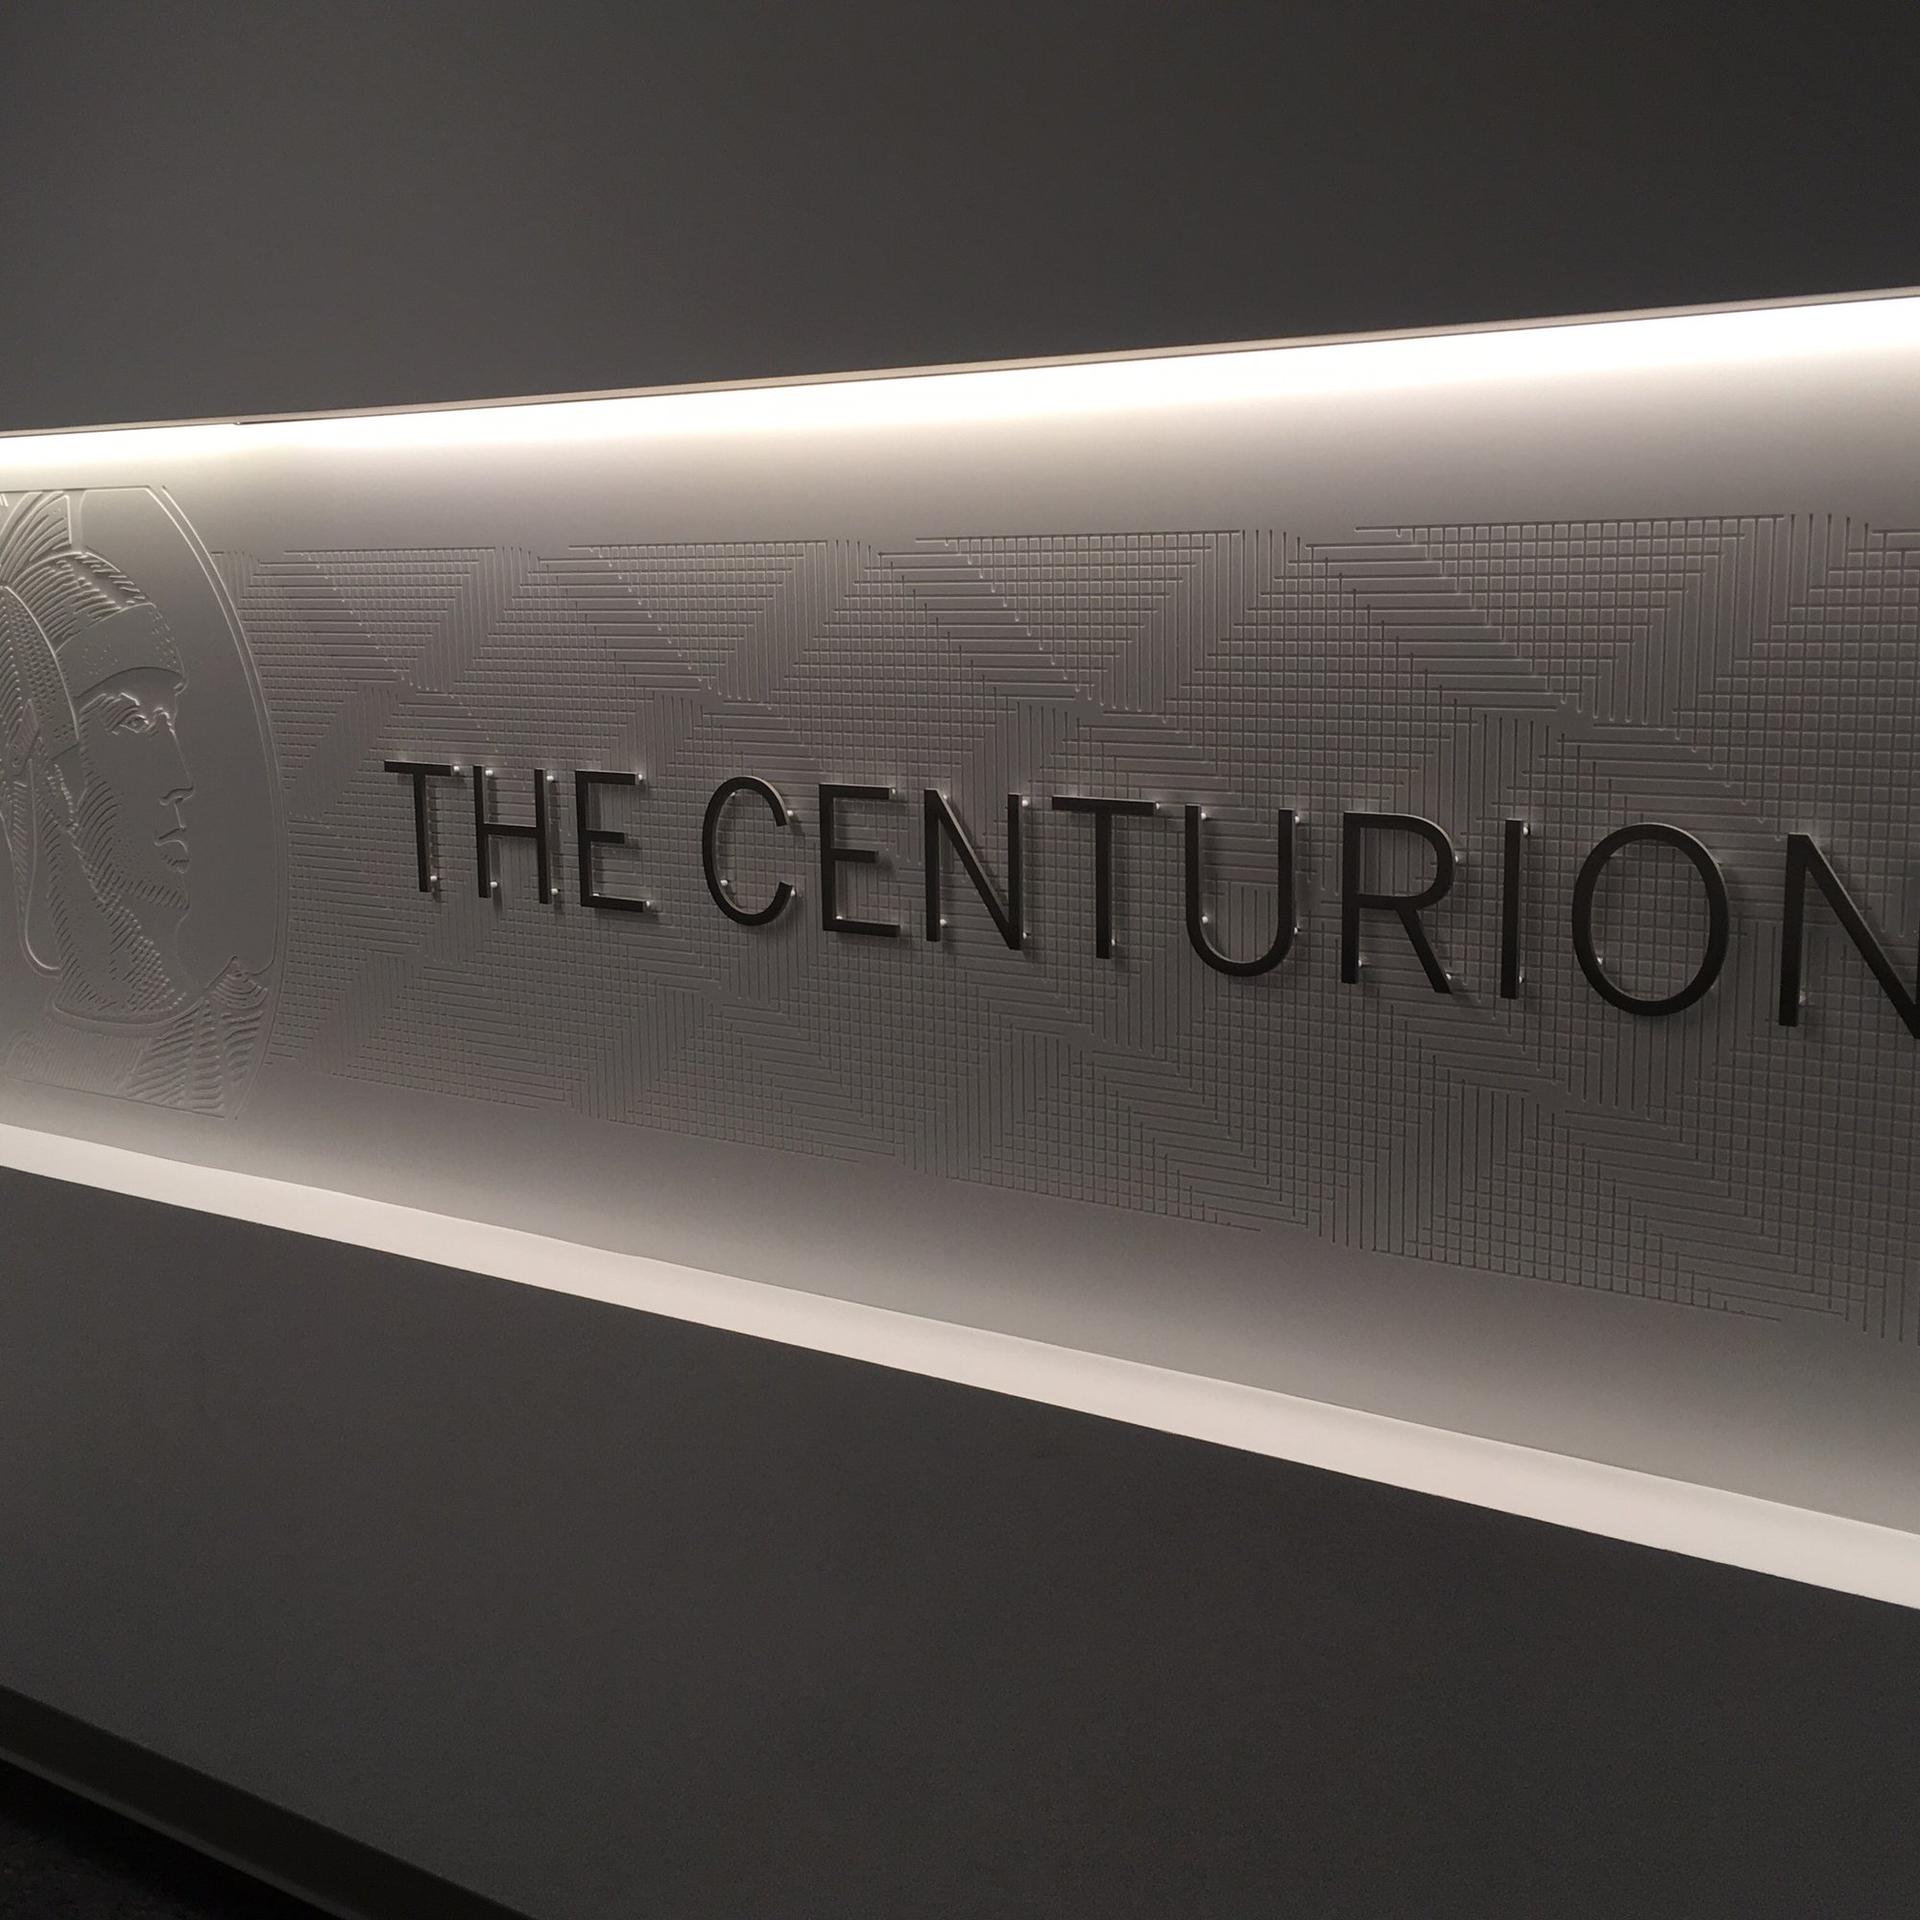 The Centurion Lounge image 25 of 76